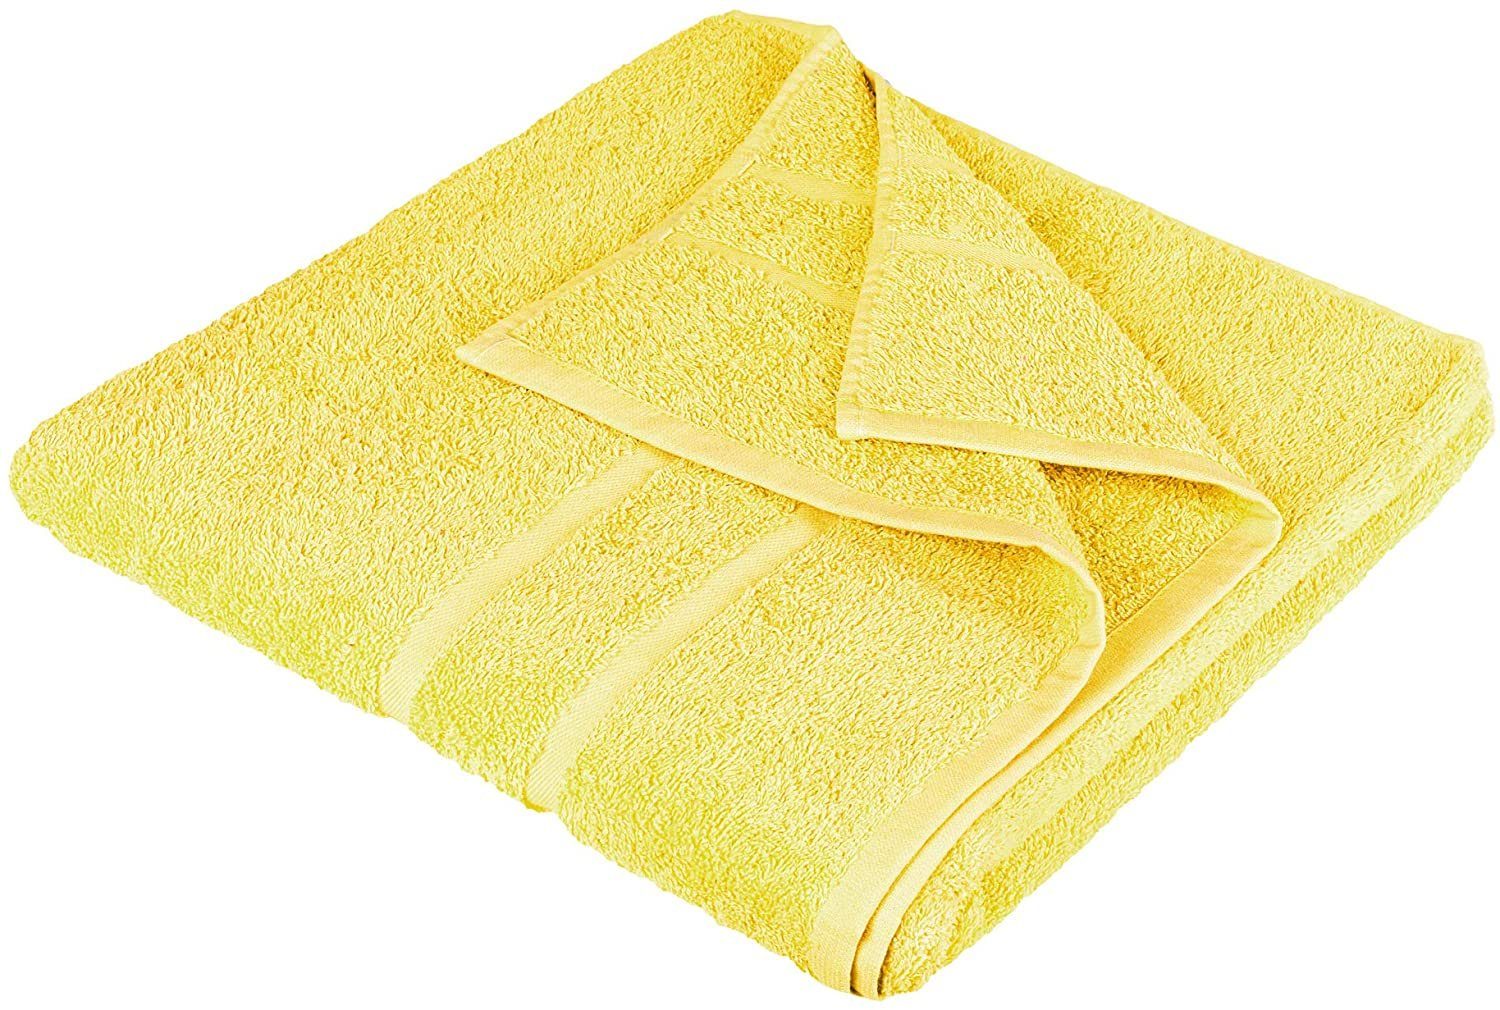 StickandShine Handtücher Saunatücher GSM 500 Handtuch 100% Baumwolle zur Gelb in Wahl Duschtücher Badetücher Gästehandtücher